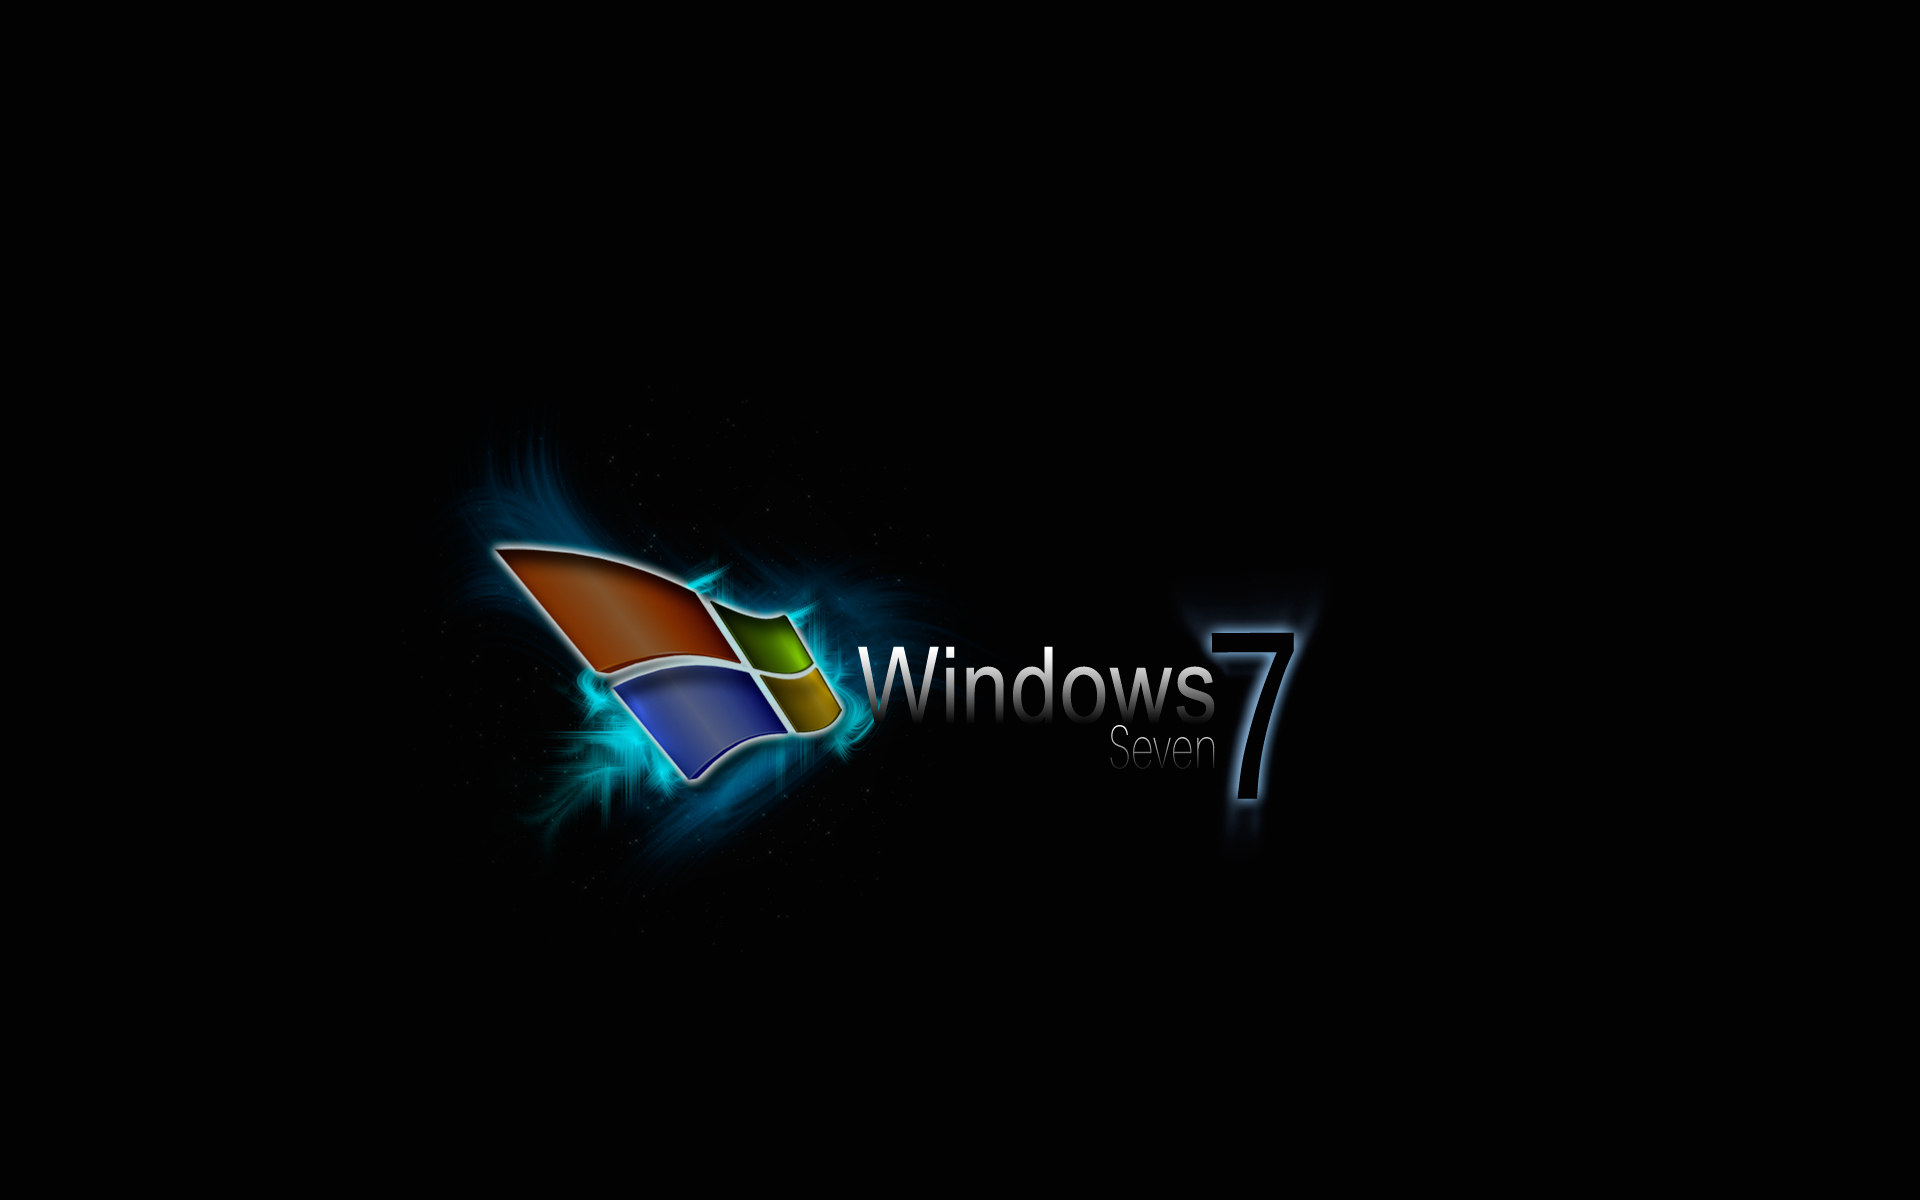 Fondos de Pantalla Windows 7 Windows Computadoras descargar imagenes